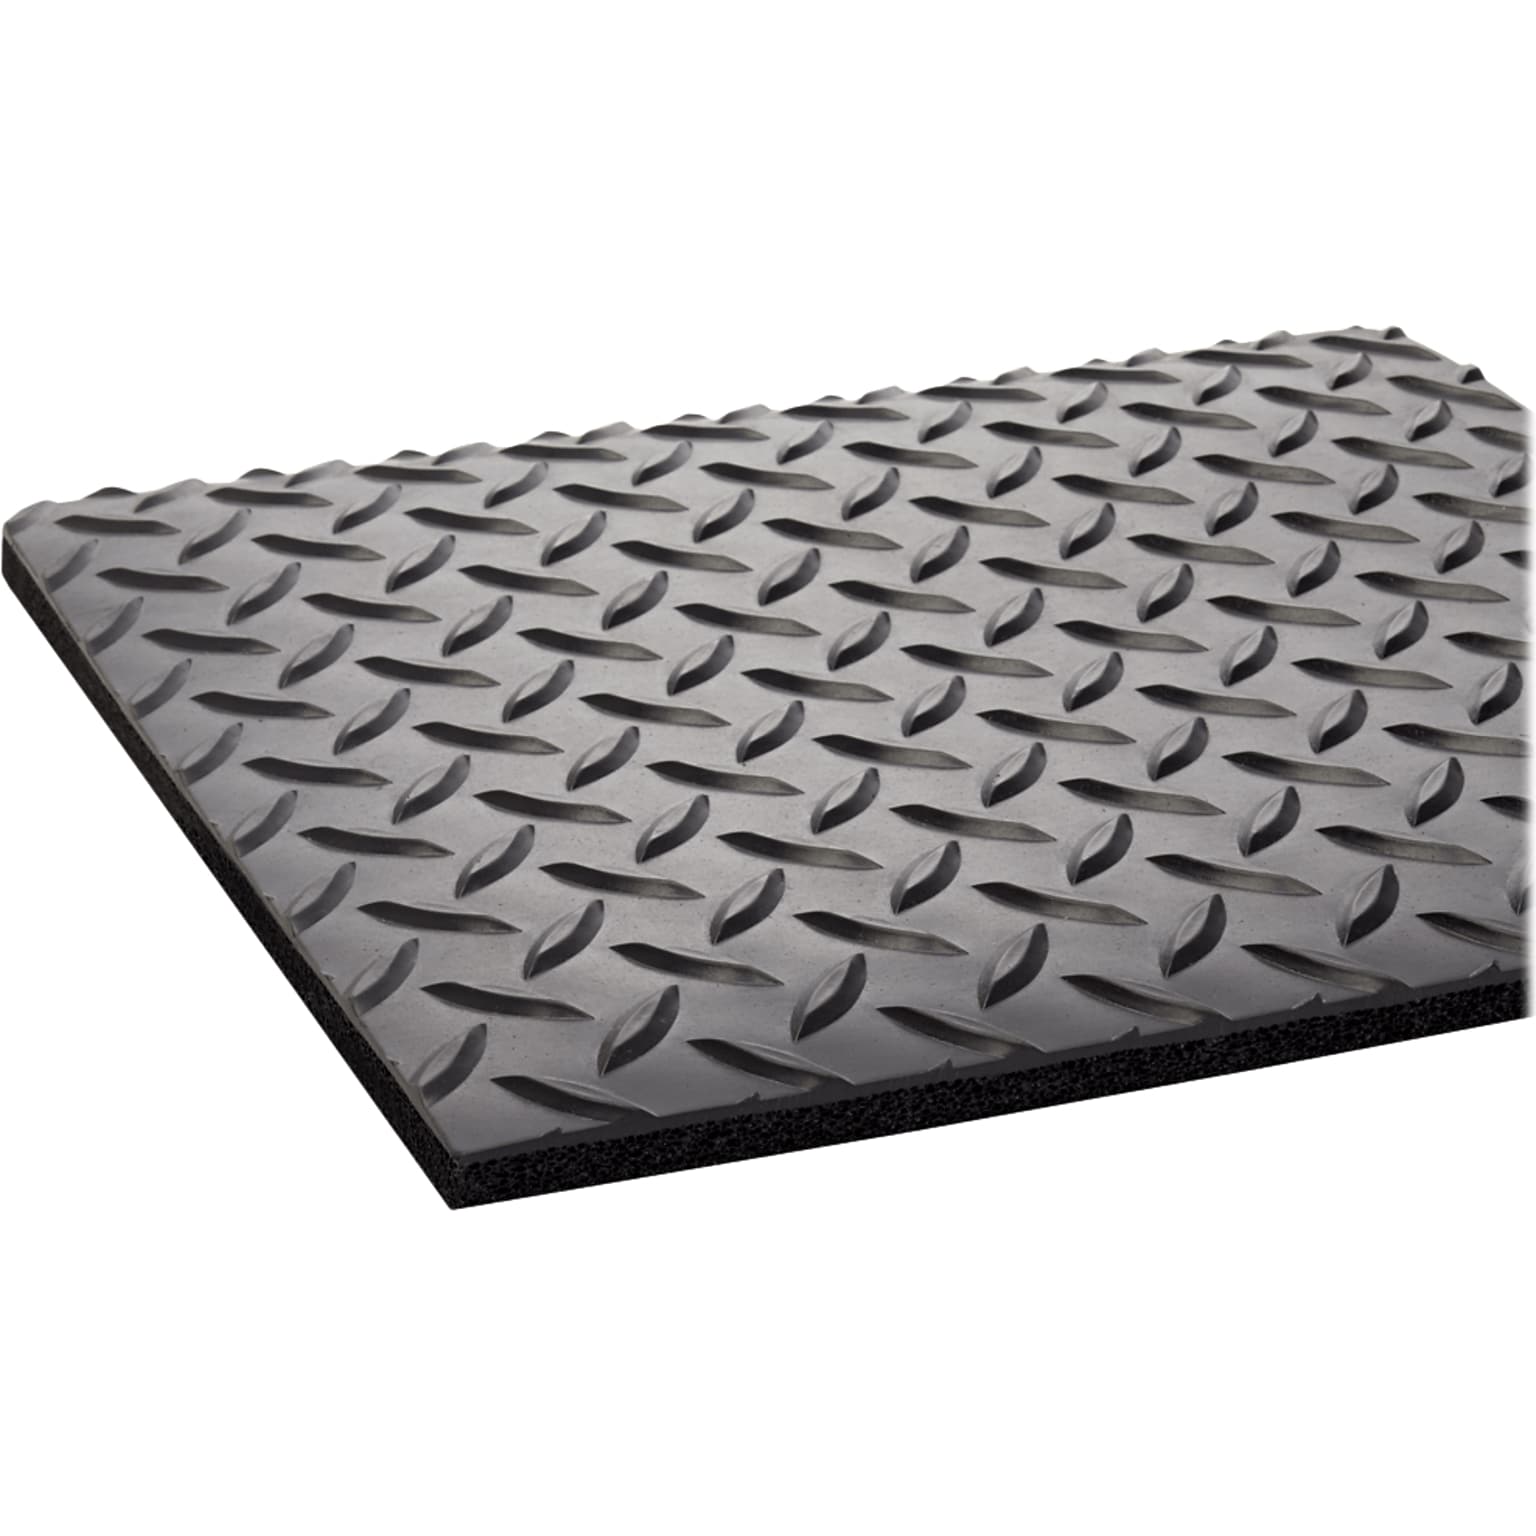 Crown Mats Industrial Deck Plate Anti-Fatigue Mat, 24 x 36, Black (CD 0023DB)